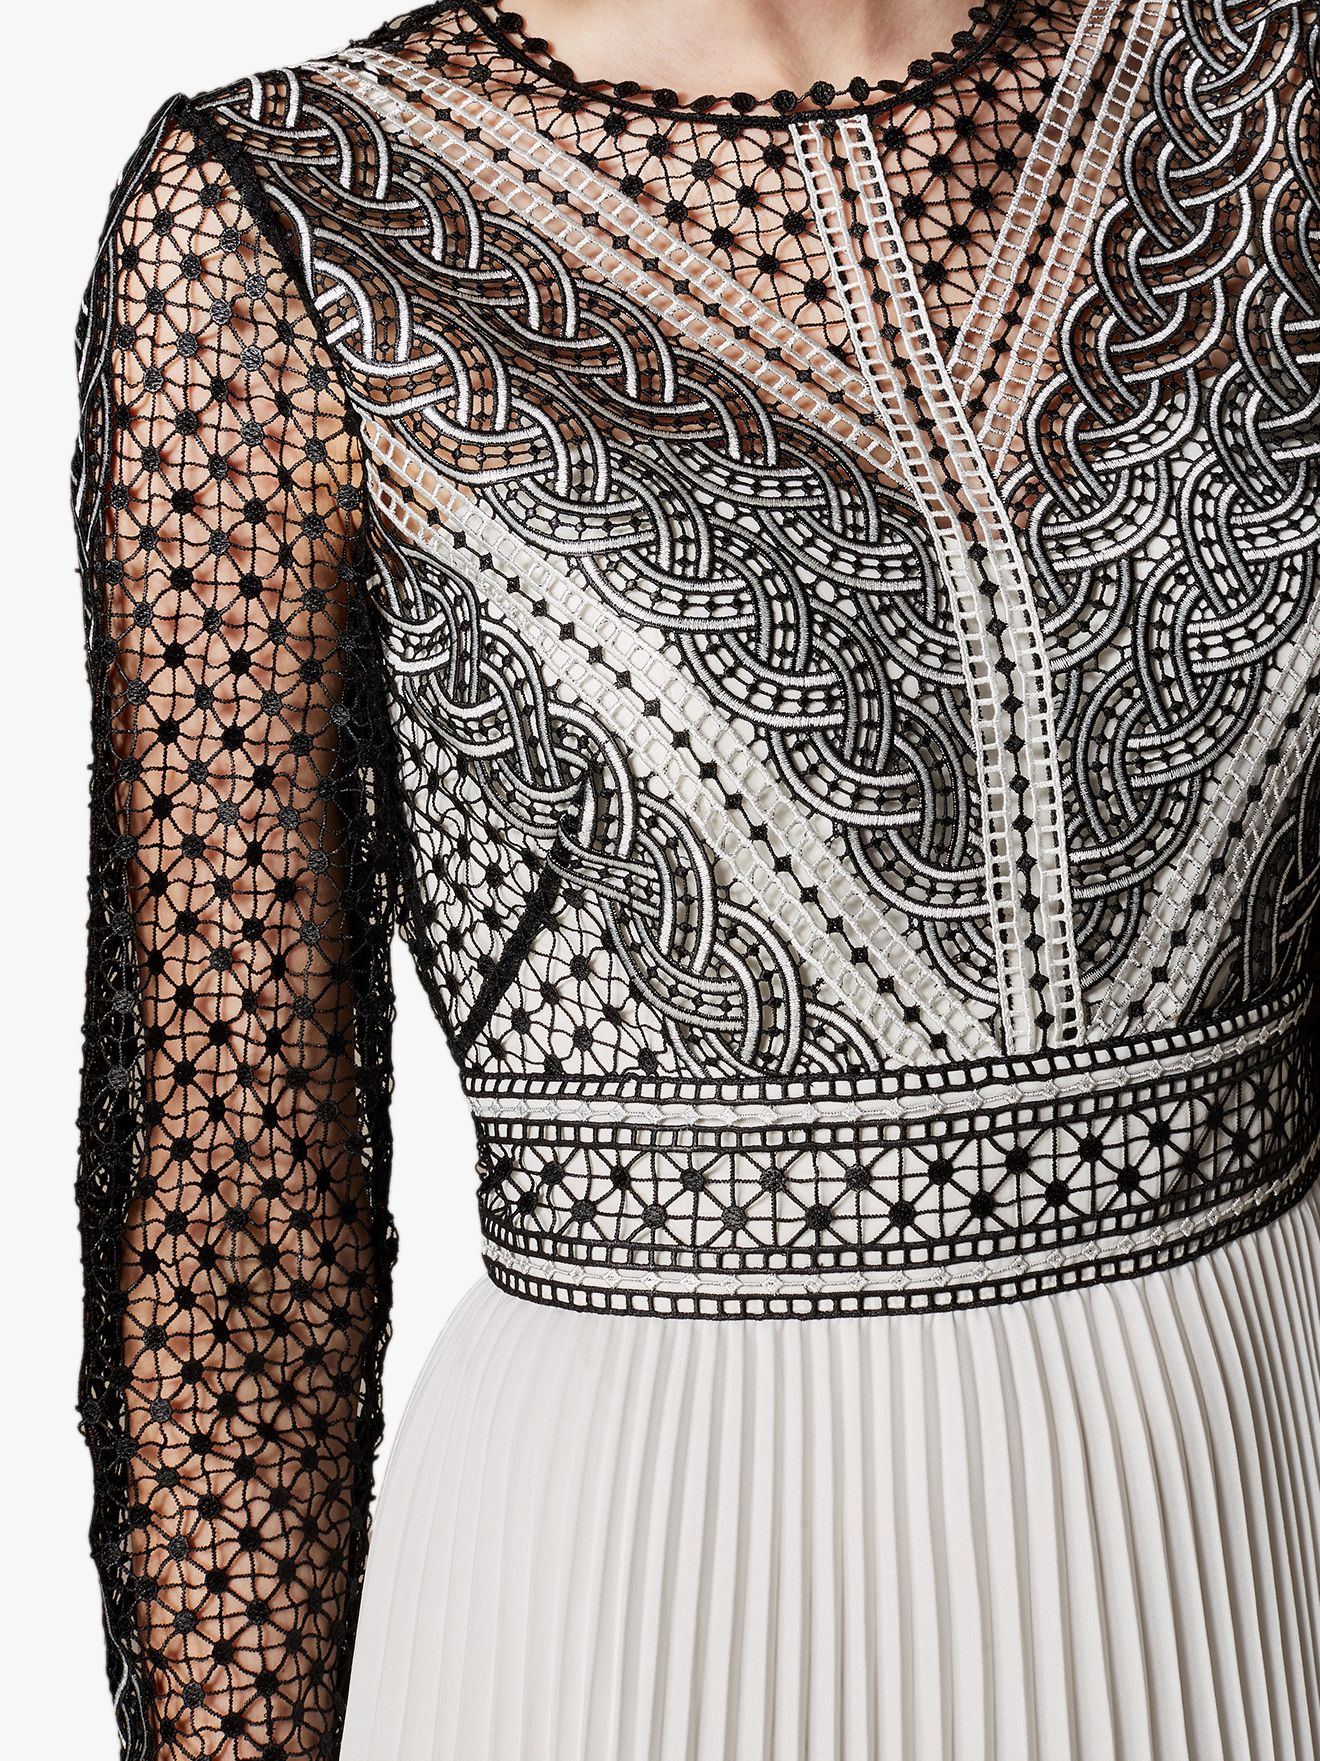 black and white lace midi dress